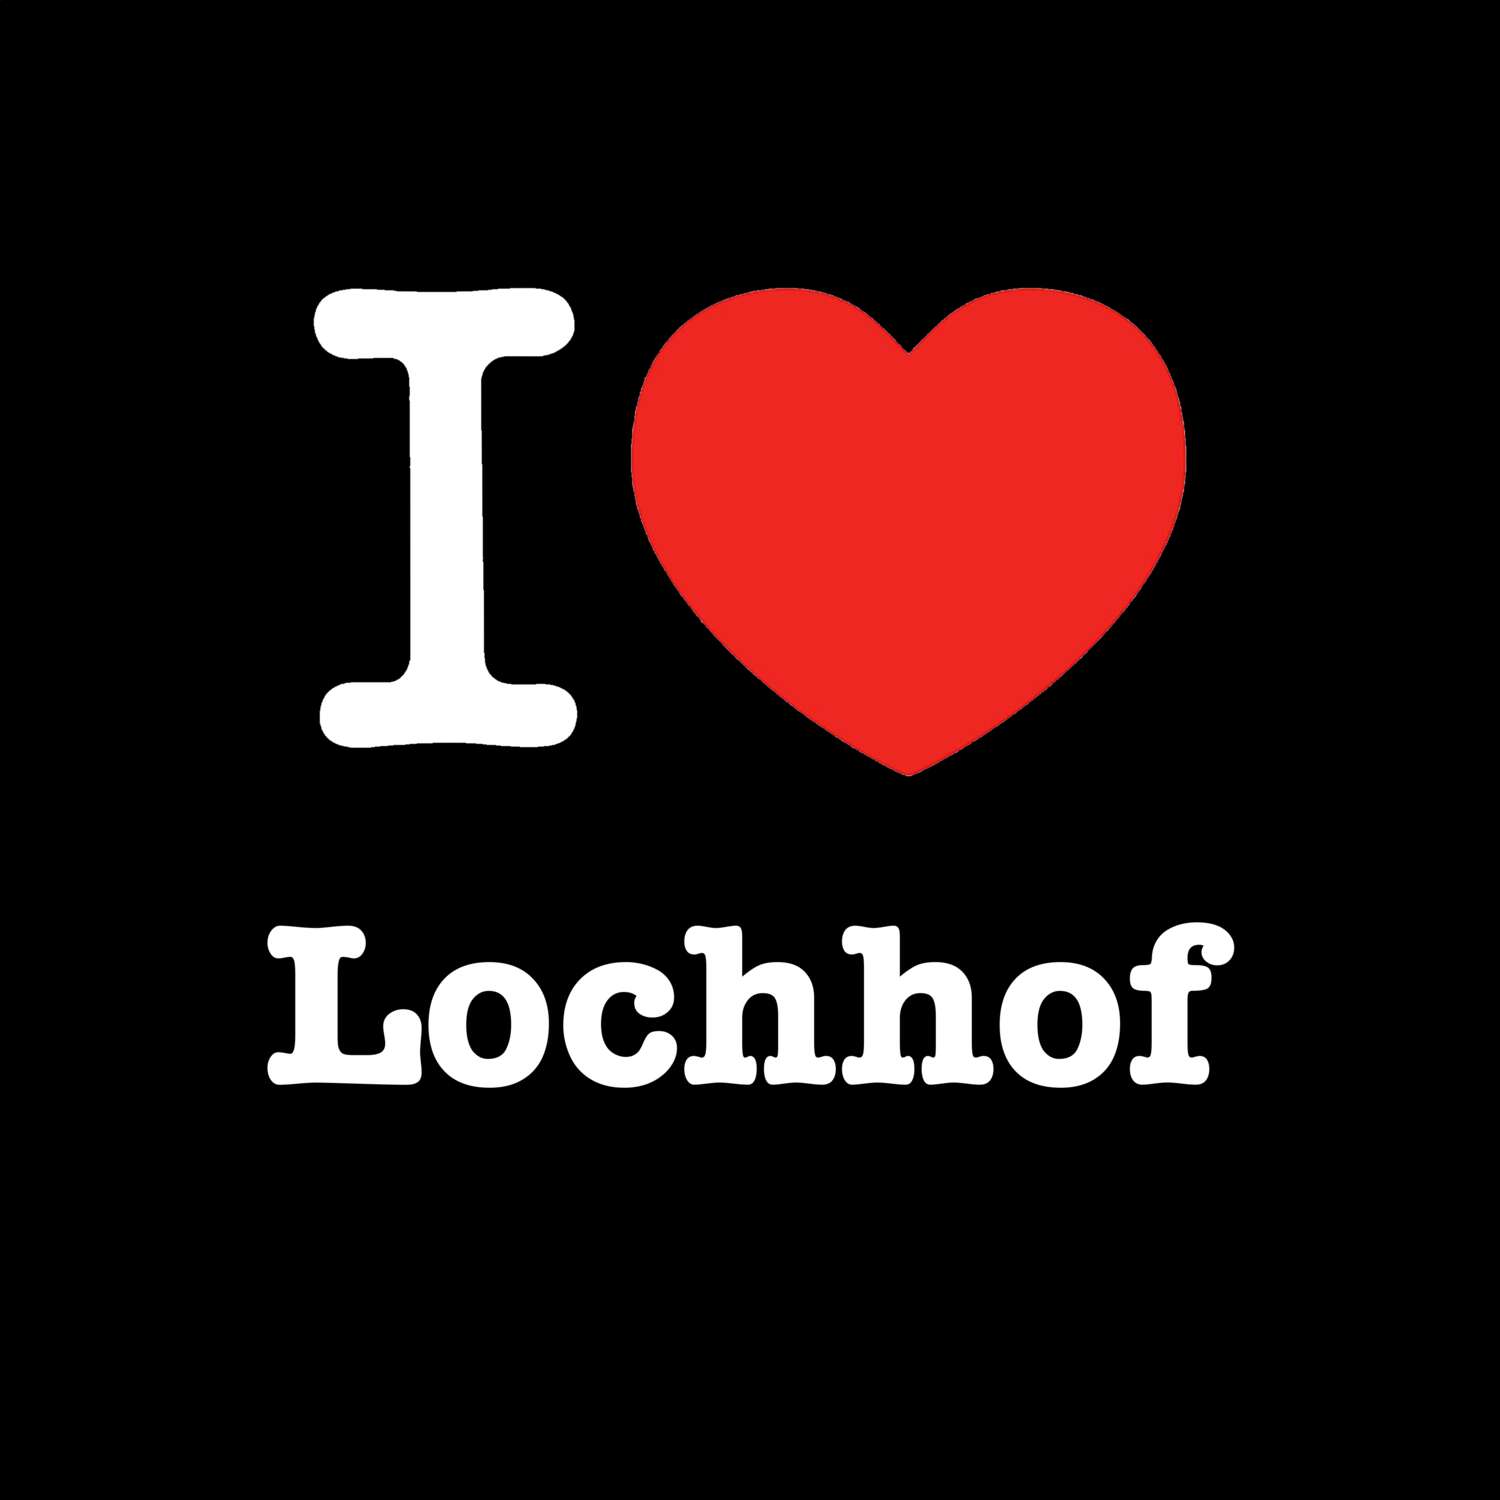 Lochhof T-Shirt »I love«